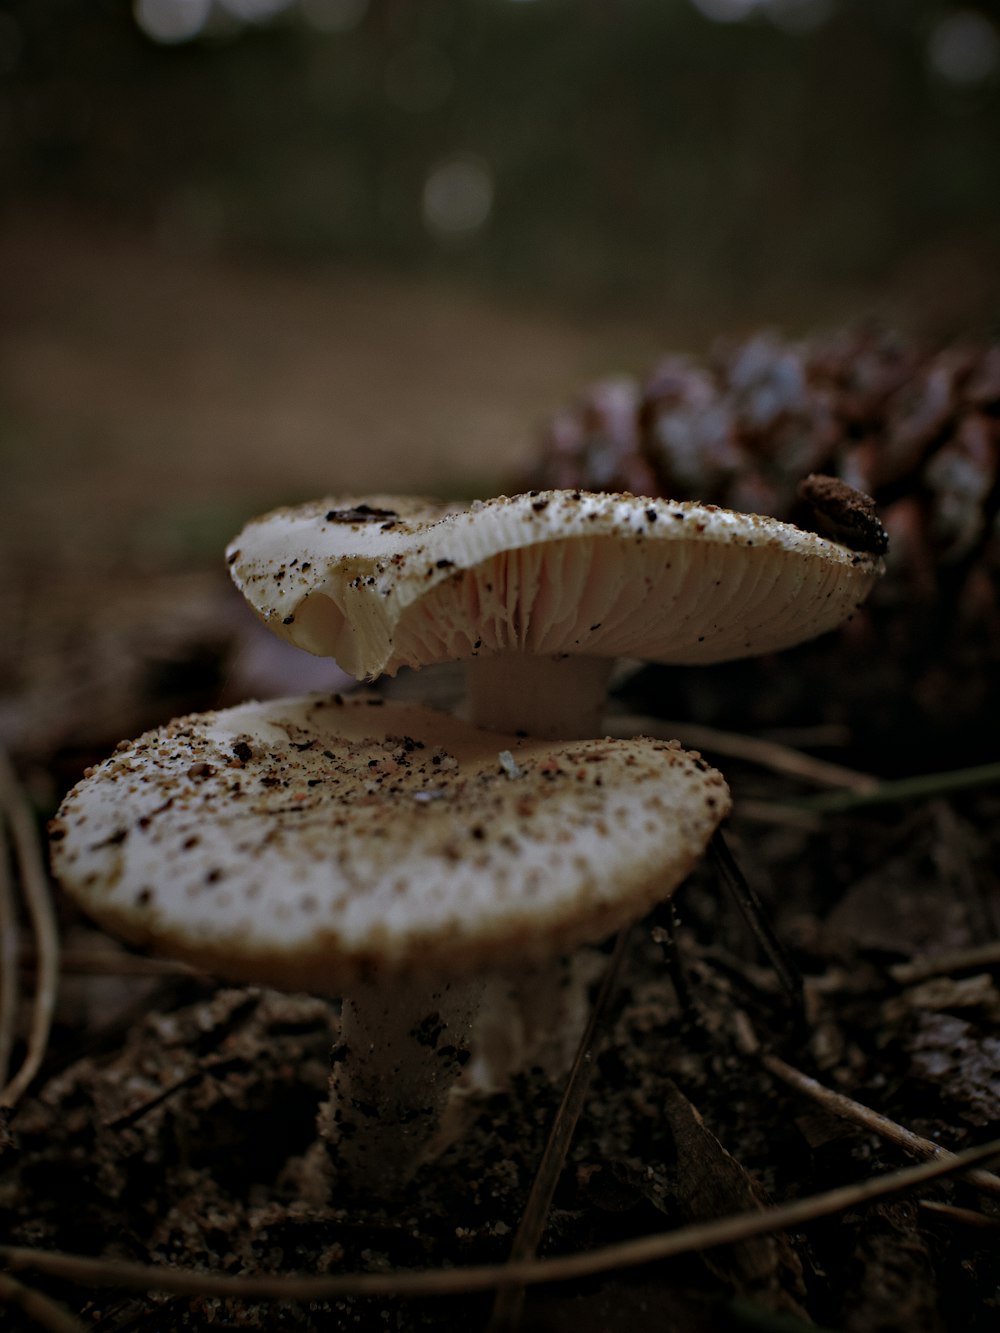 champignon blanc et brun en gros plan